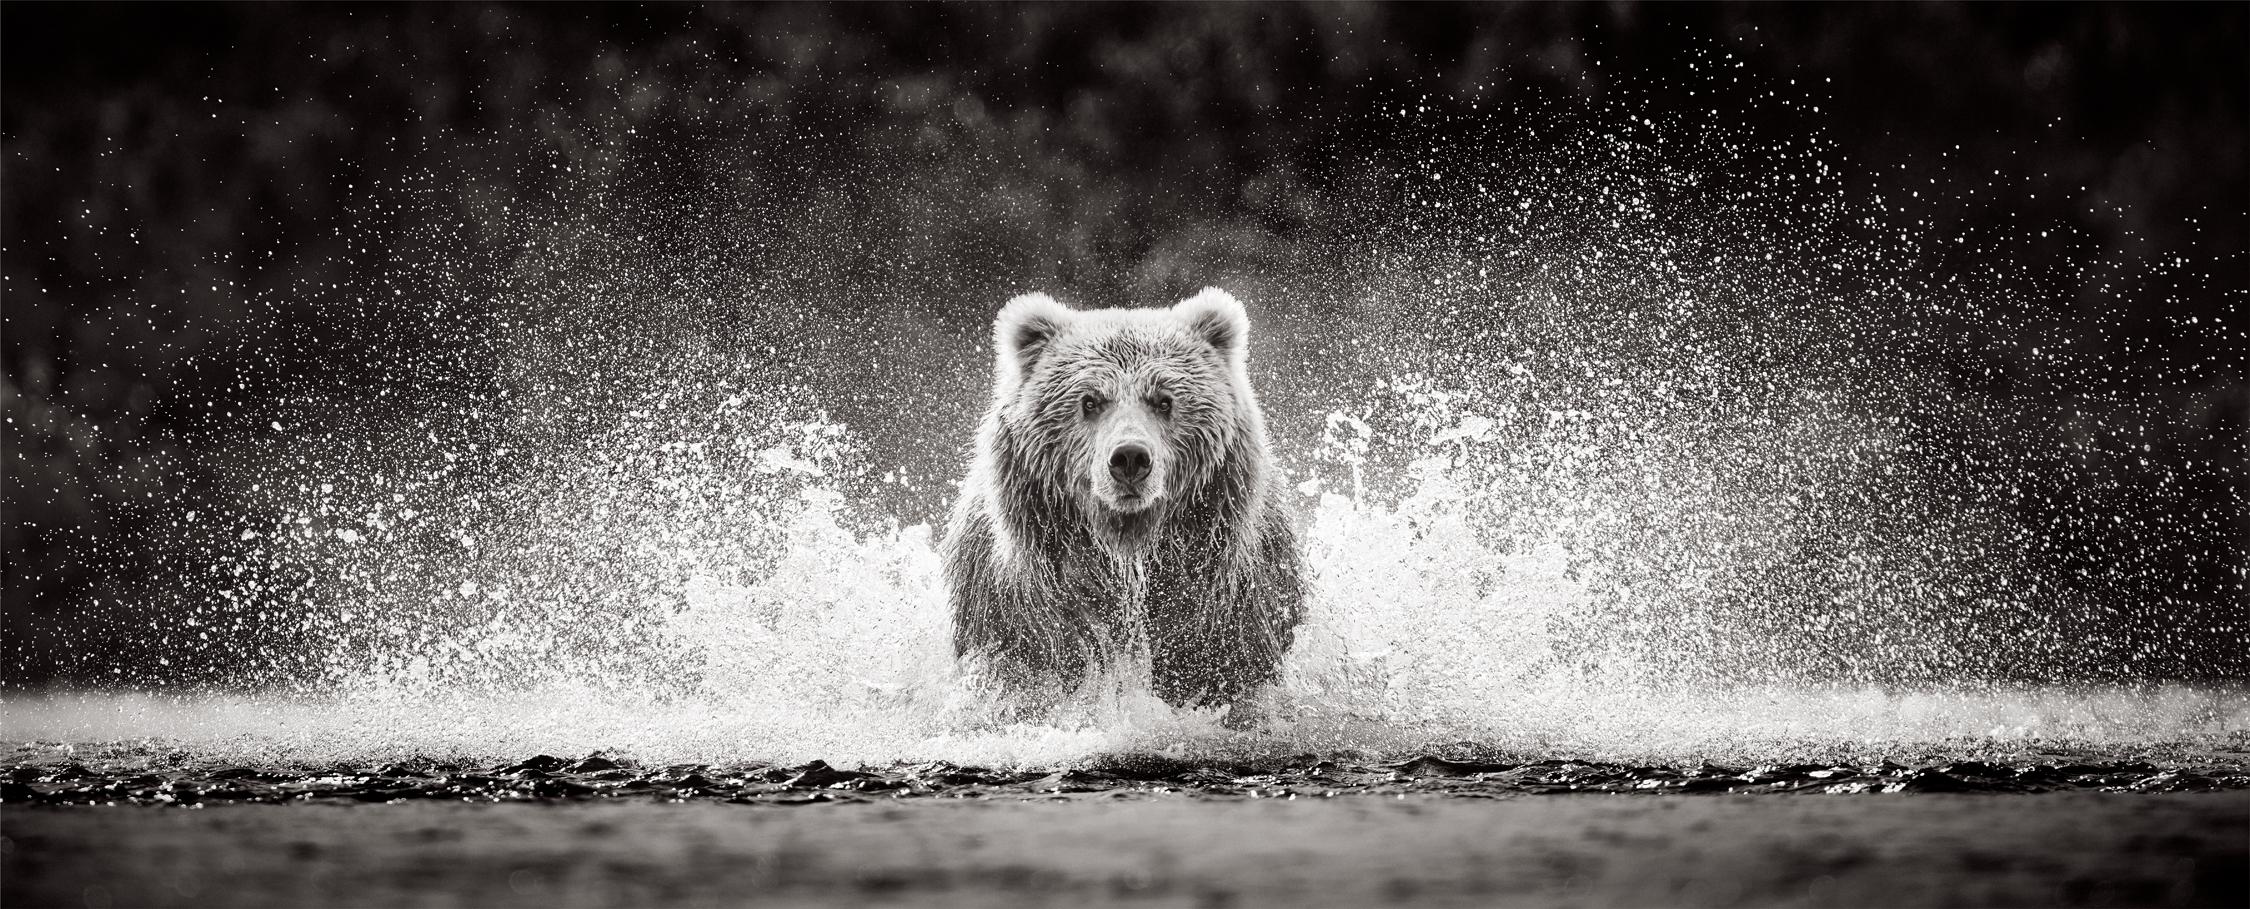 Drew Doggett Black and White Photograph – Brown Bear Racing in Richtung der Kamera in der Creek